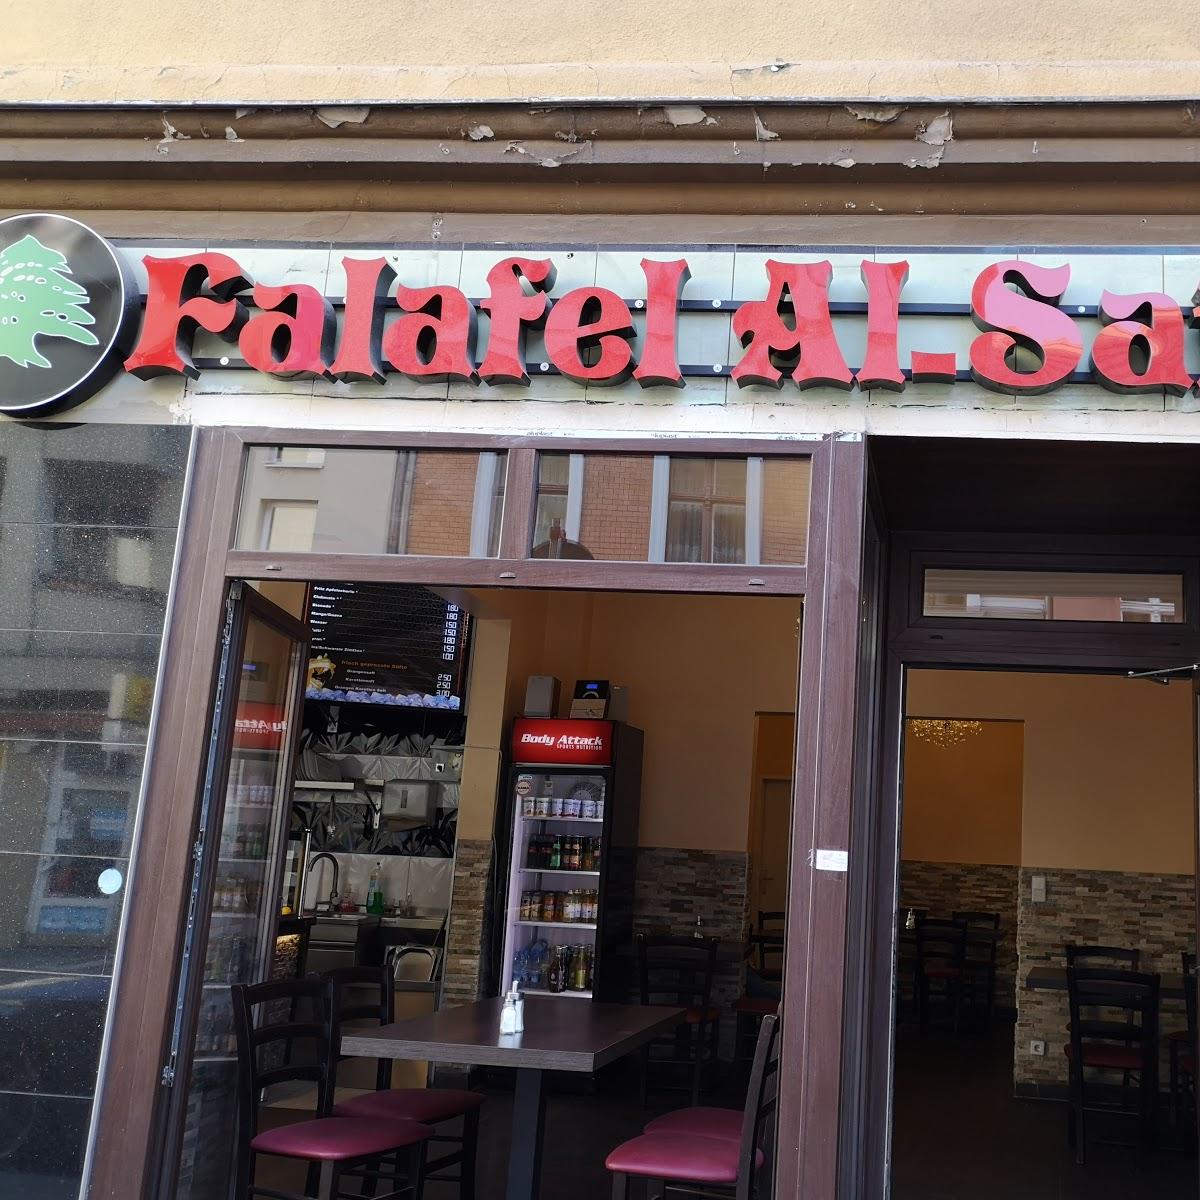 Restaurant "Falafel Al Safe" in Berlin